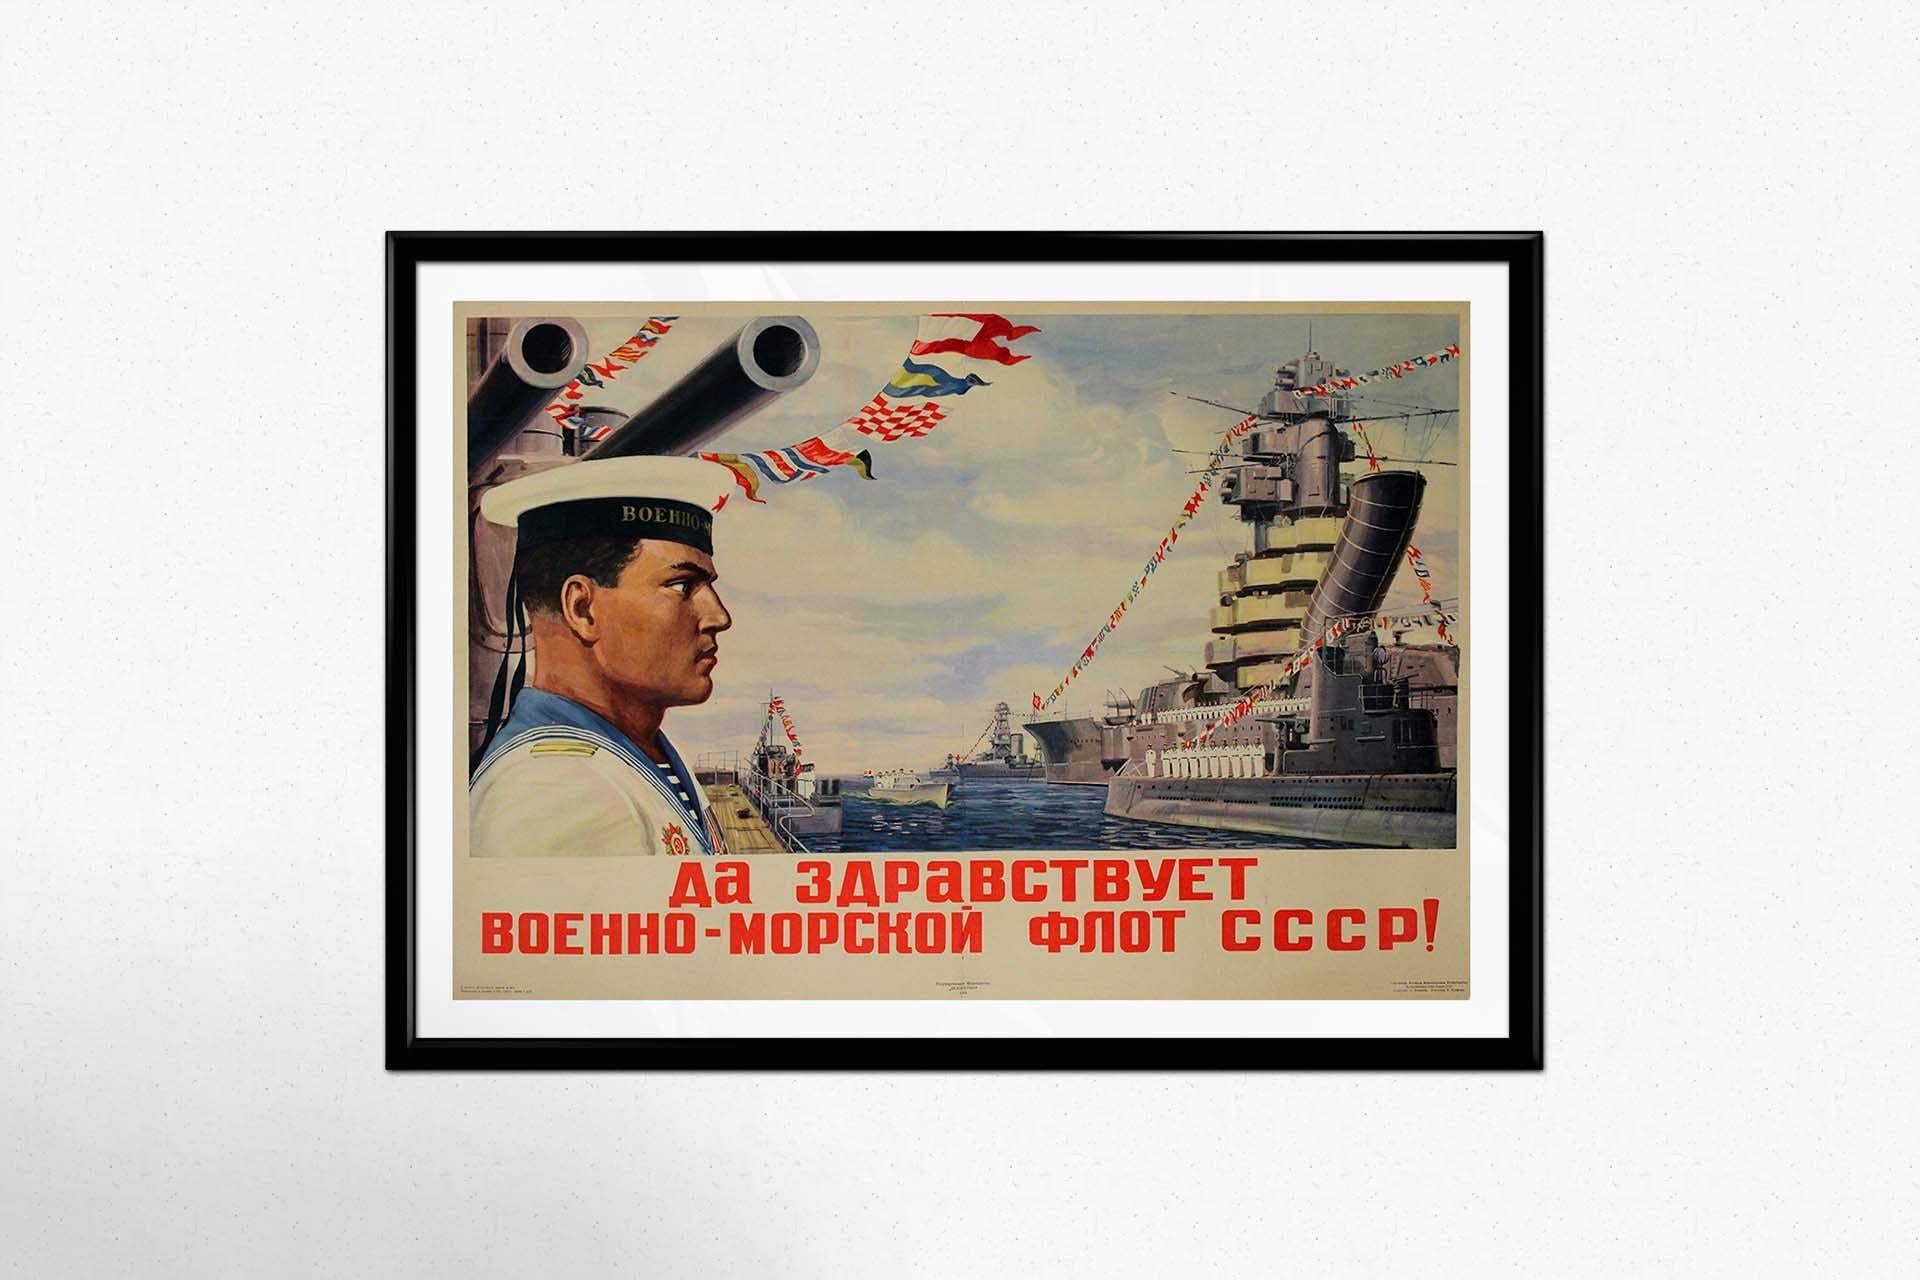 The original 1946 Soviet propaganda poster titled 